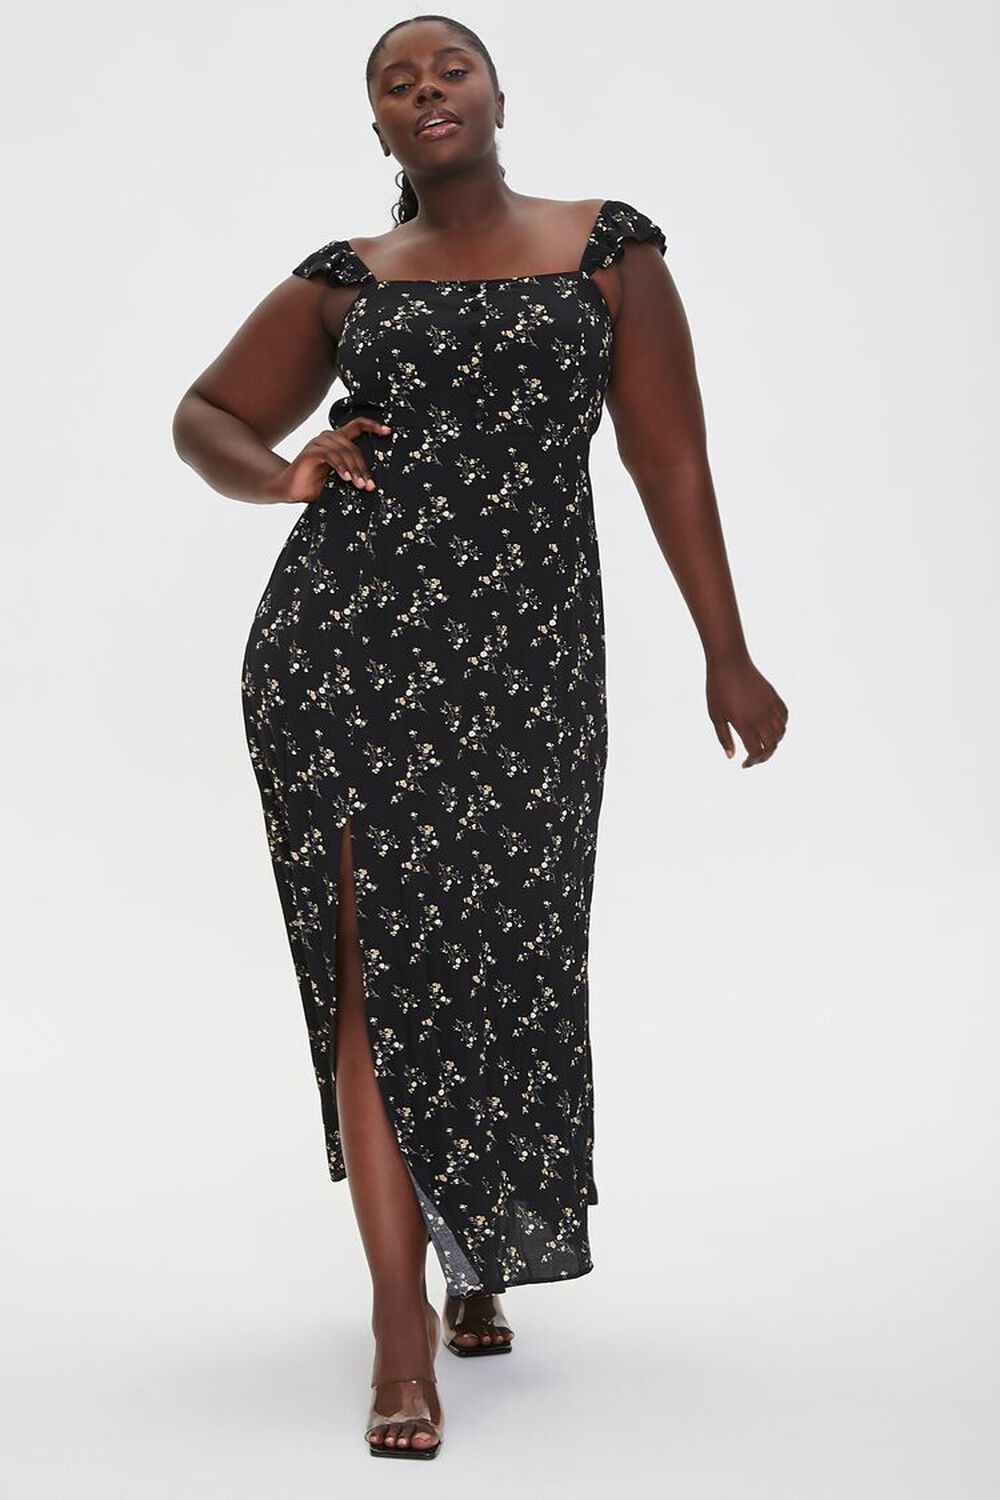 BLACK/MULTI Plus Size Floral Maxi Dress, image 1